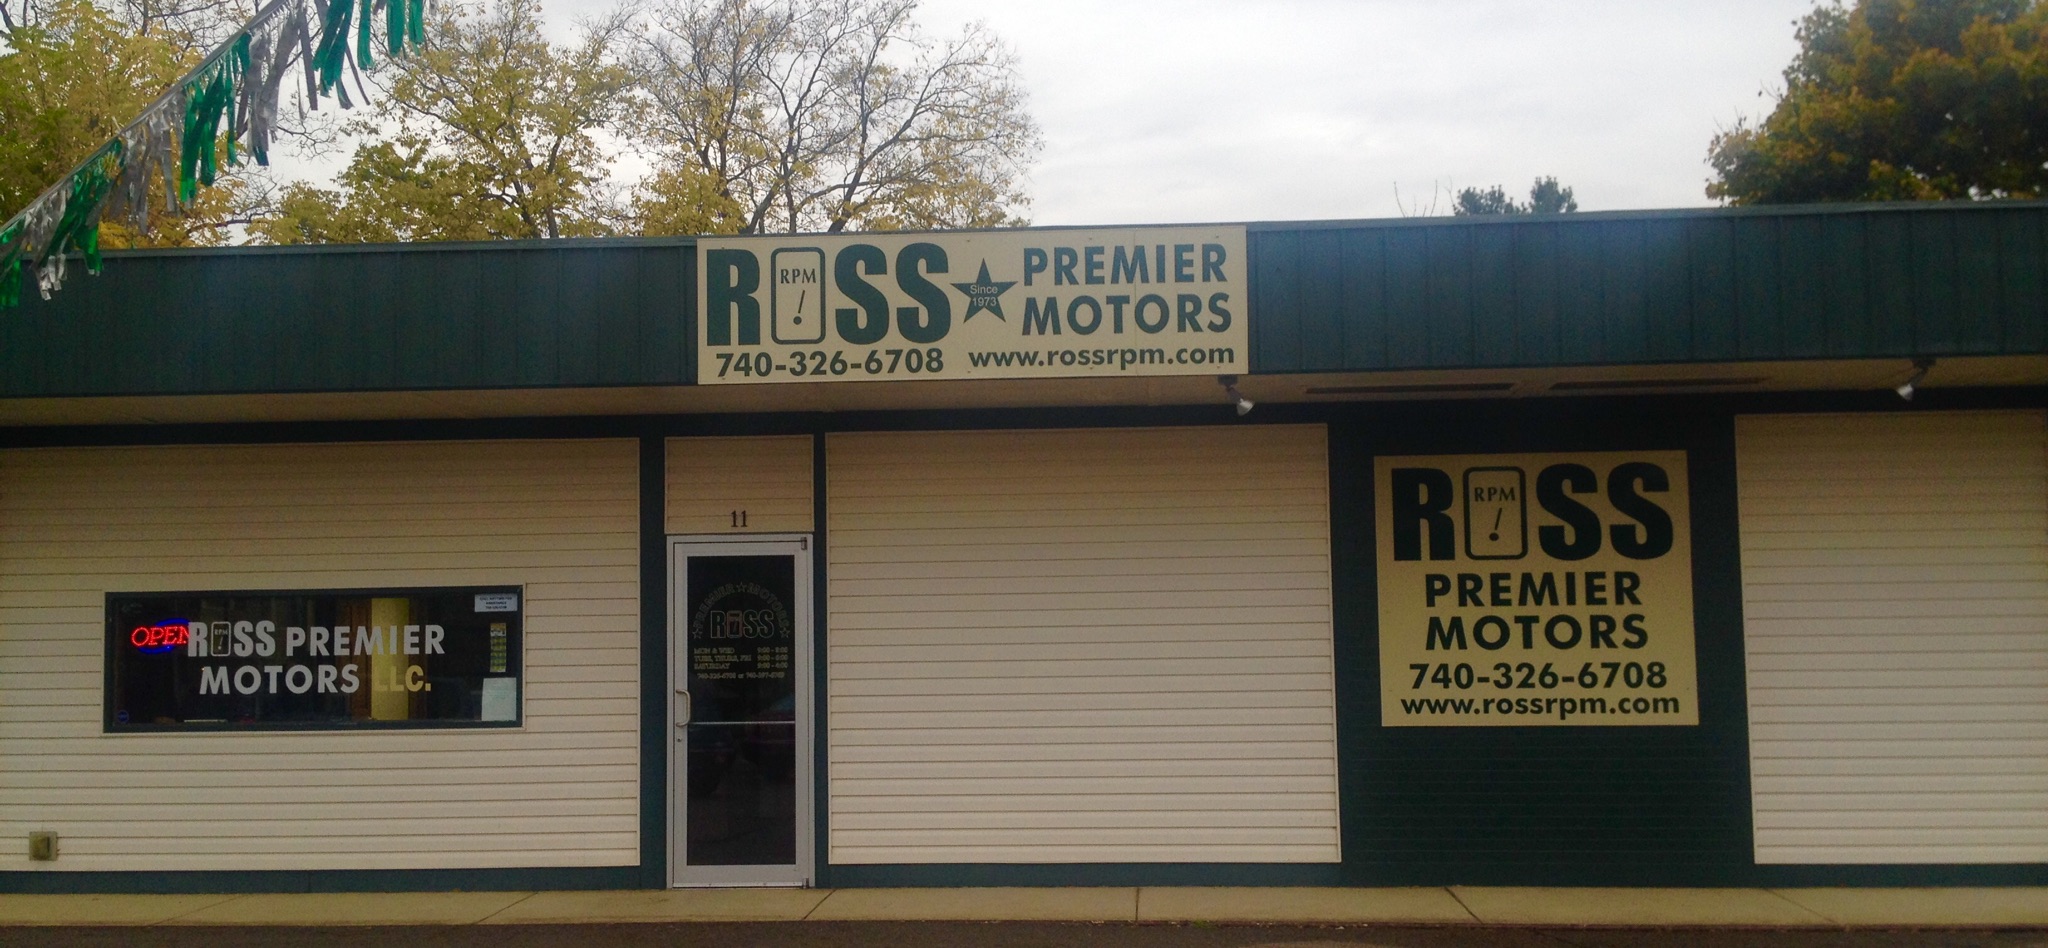 Ross Premier Motors East 11 Coshocton Ave, Mount Vernon, OH 43050 - YP.com